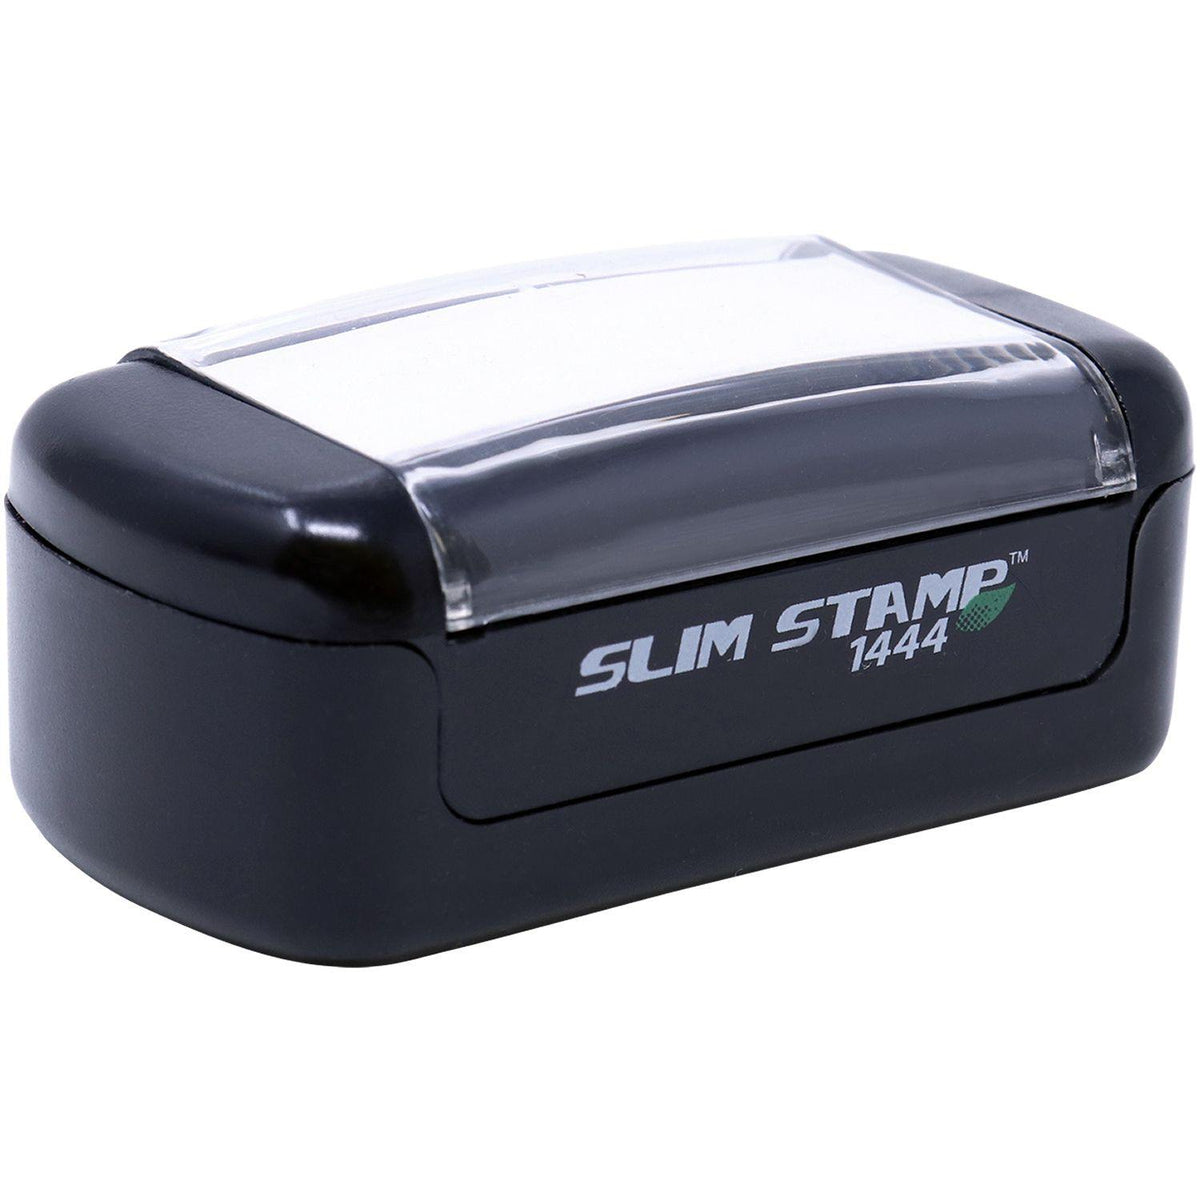 Alt View of Slim Pre Inked Redacted Stamp Mount Angle